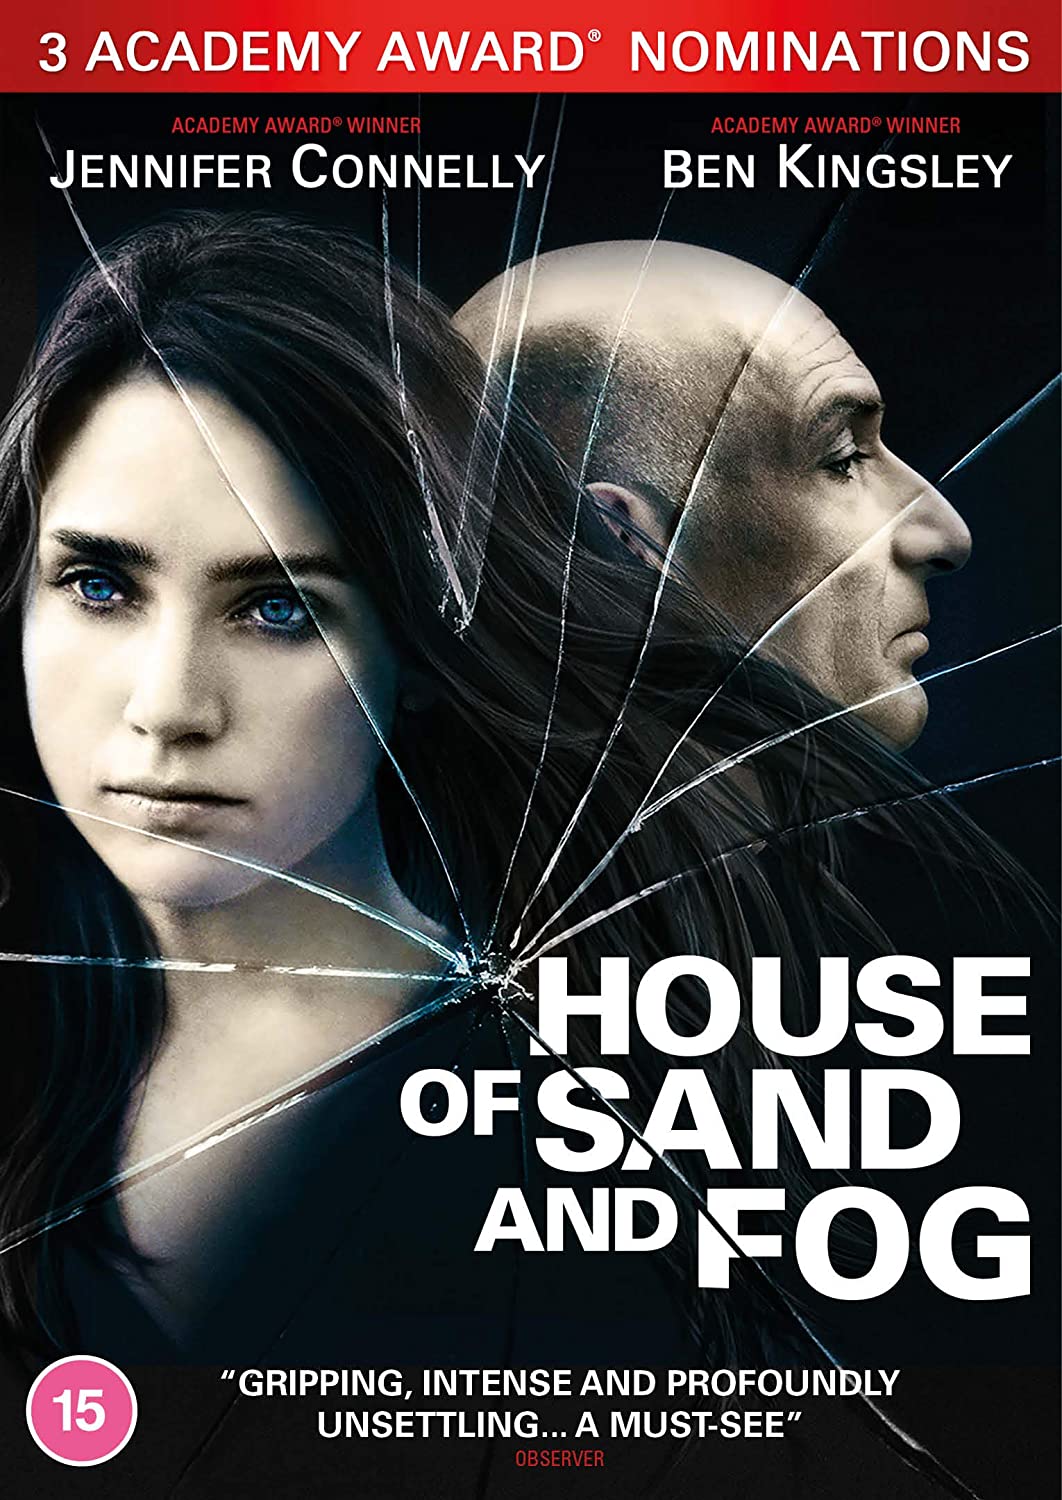 House of Sand and Fog - Drama/Psychological thriller [DVD]